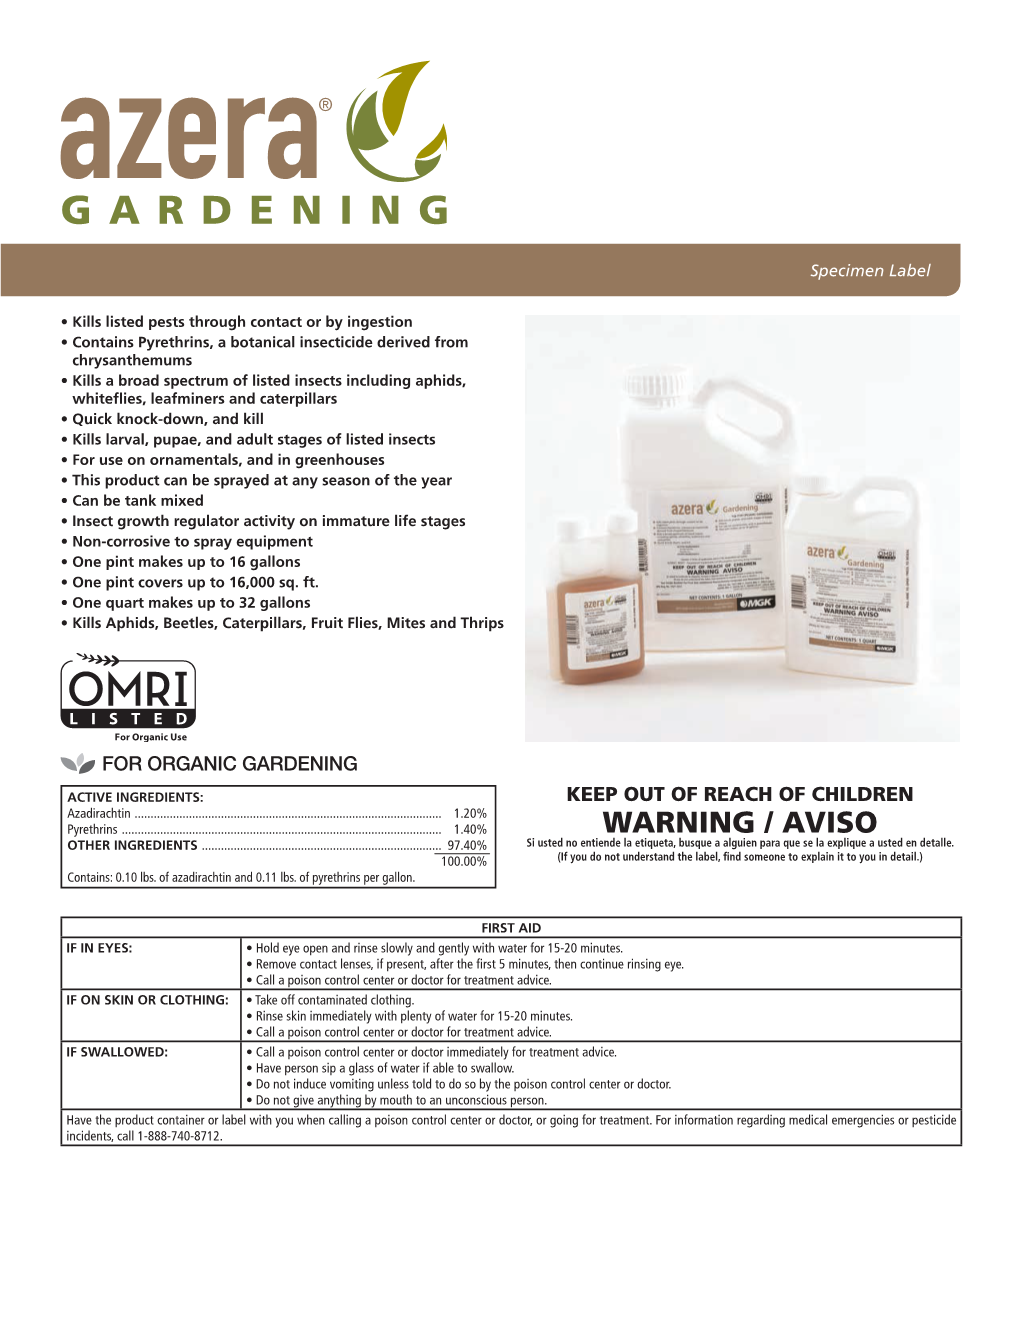 Azera Gardening Label